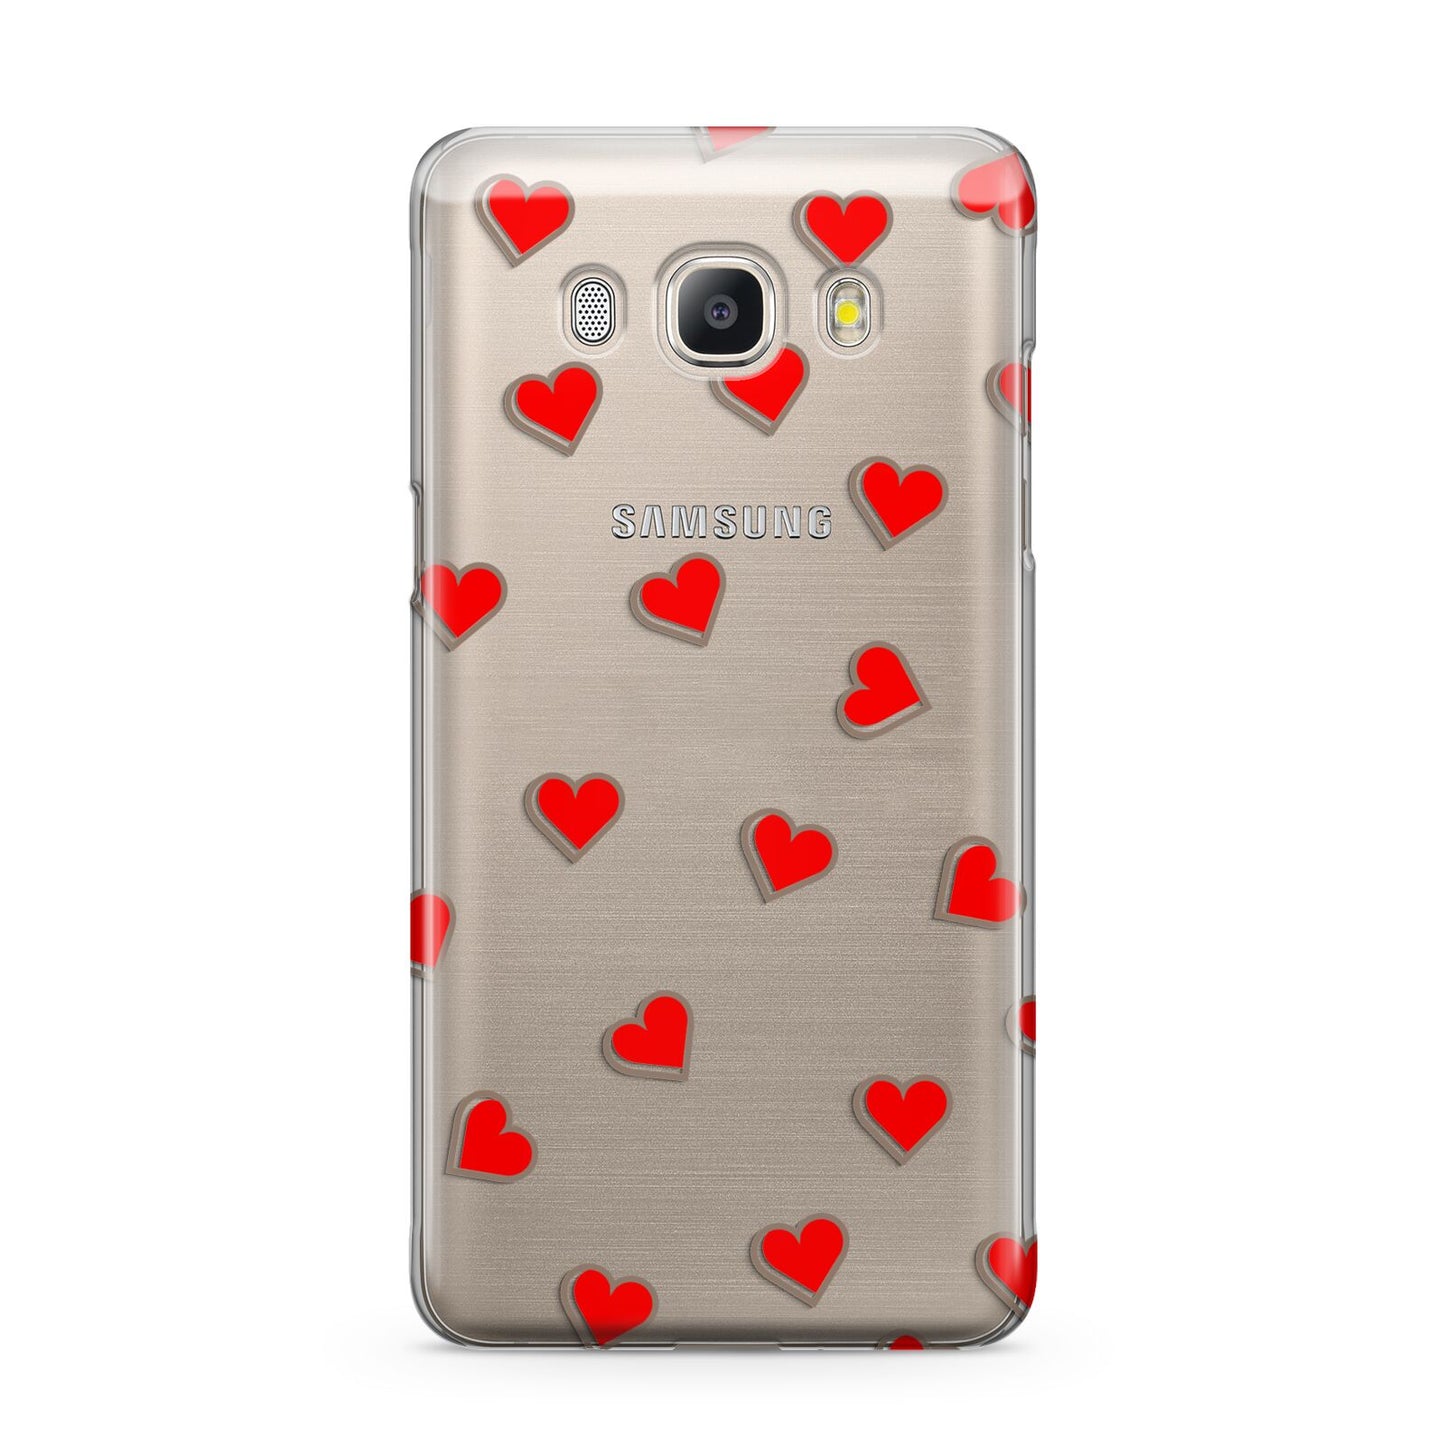 Cute Red Hearts Samsung Galaxy J5 2016 Case